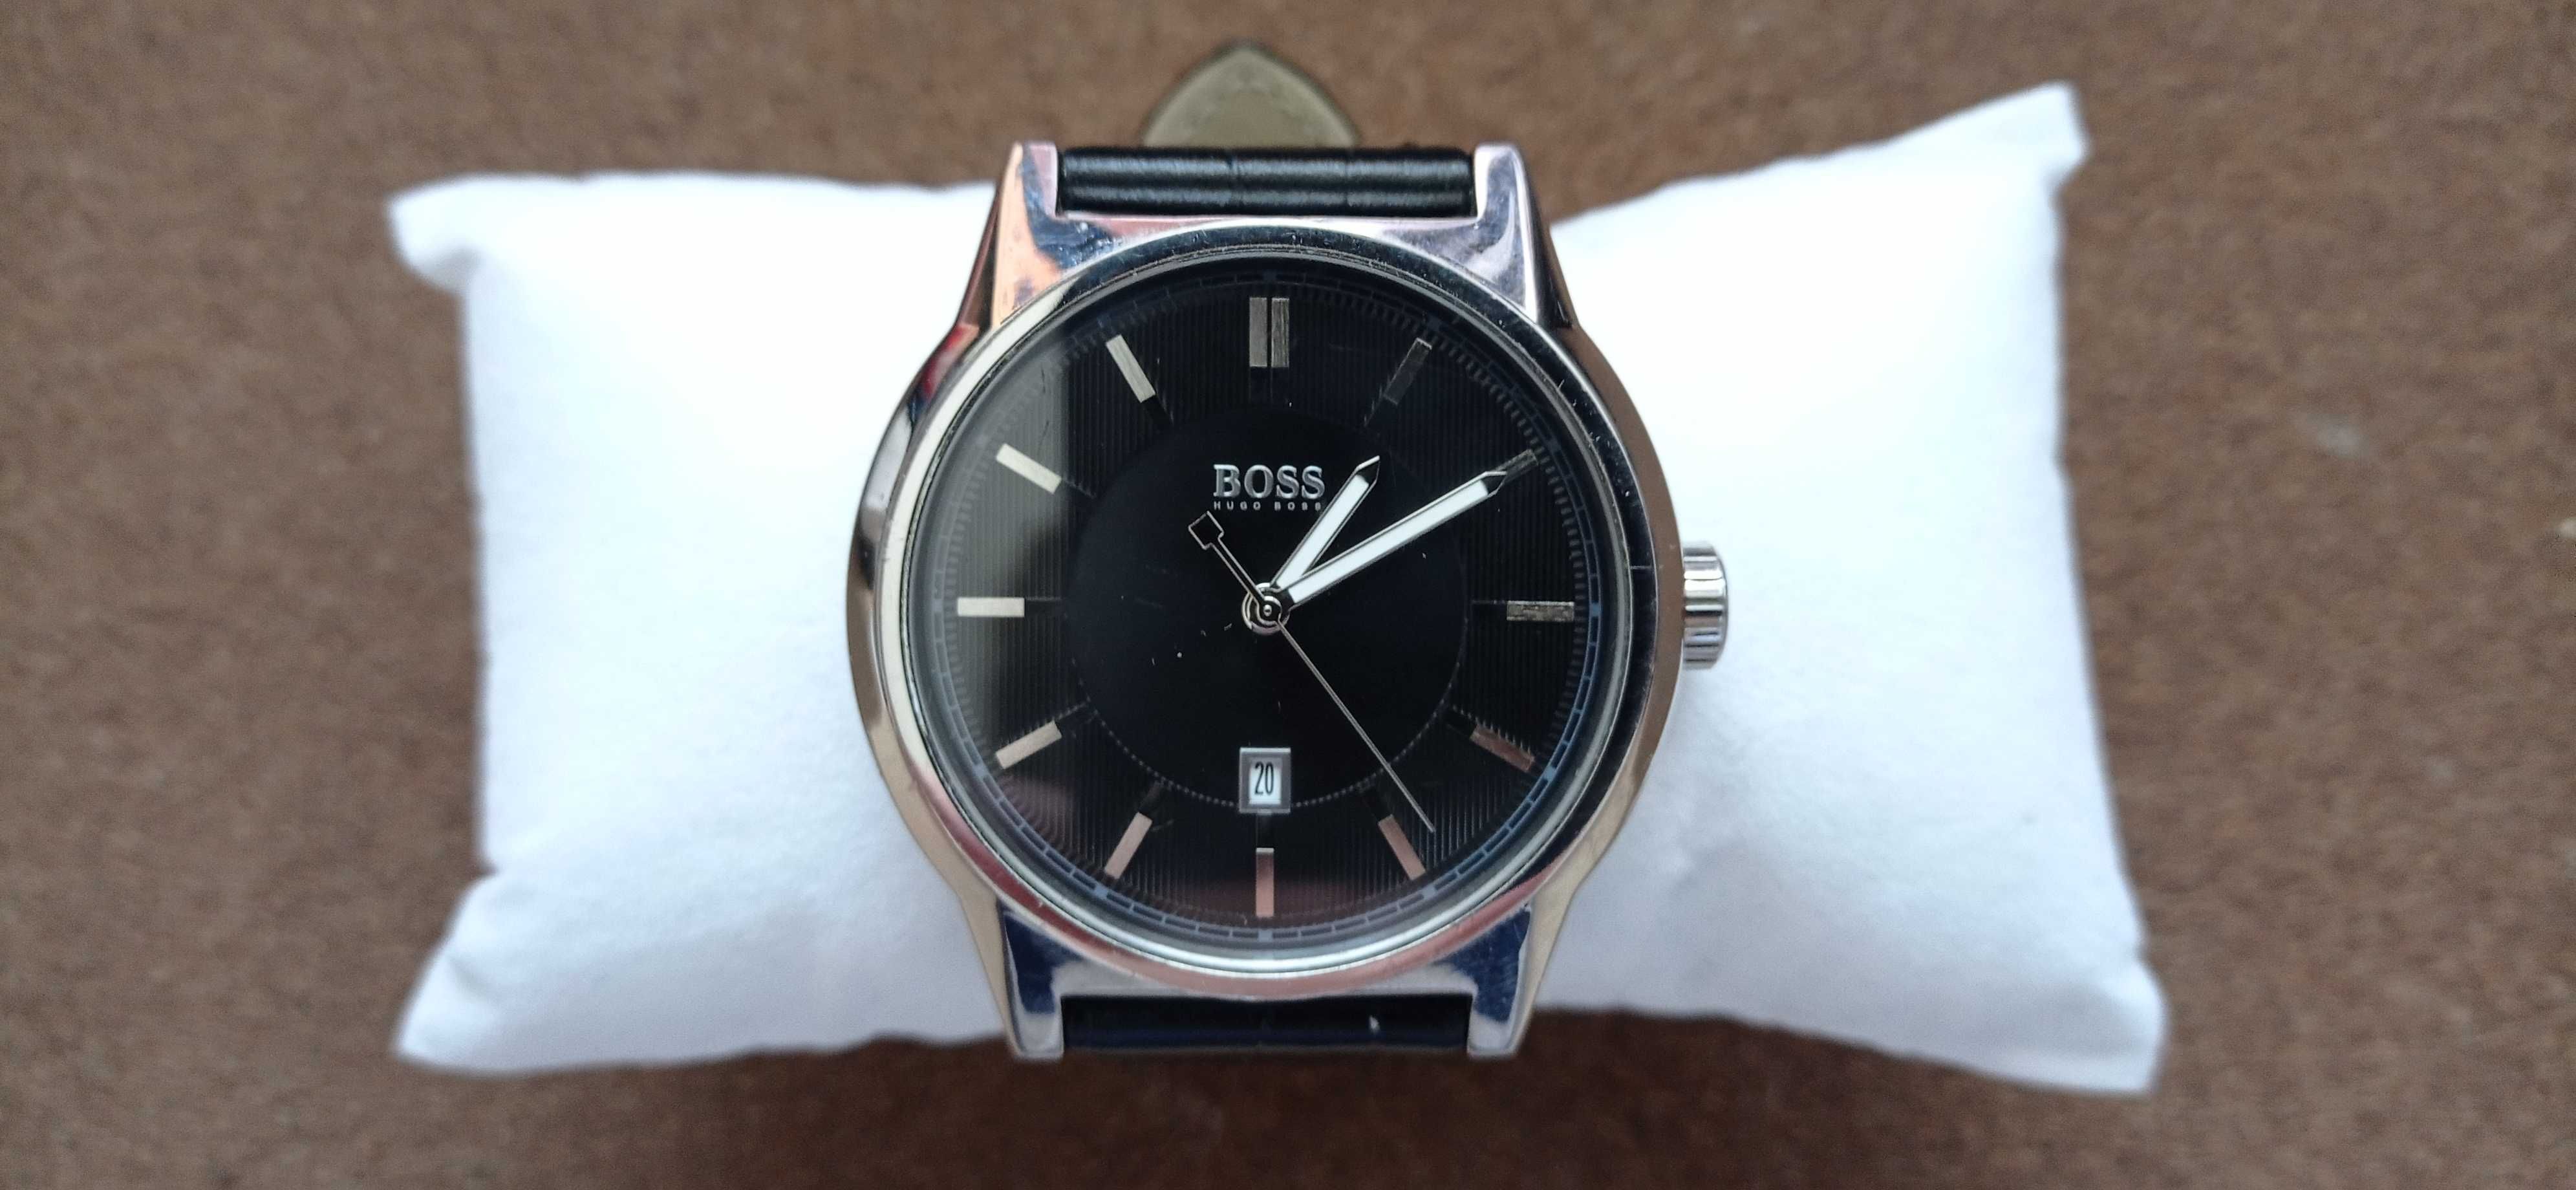 Zegarek szwajcarski Hugo Boss Ambassador Oryginalny